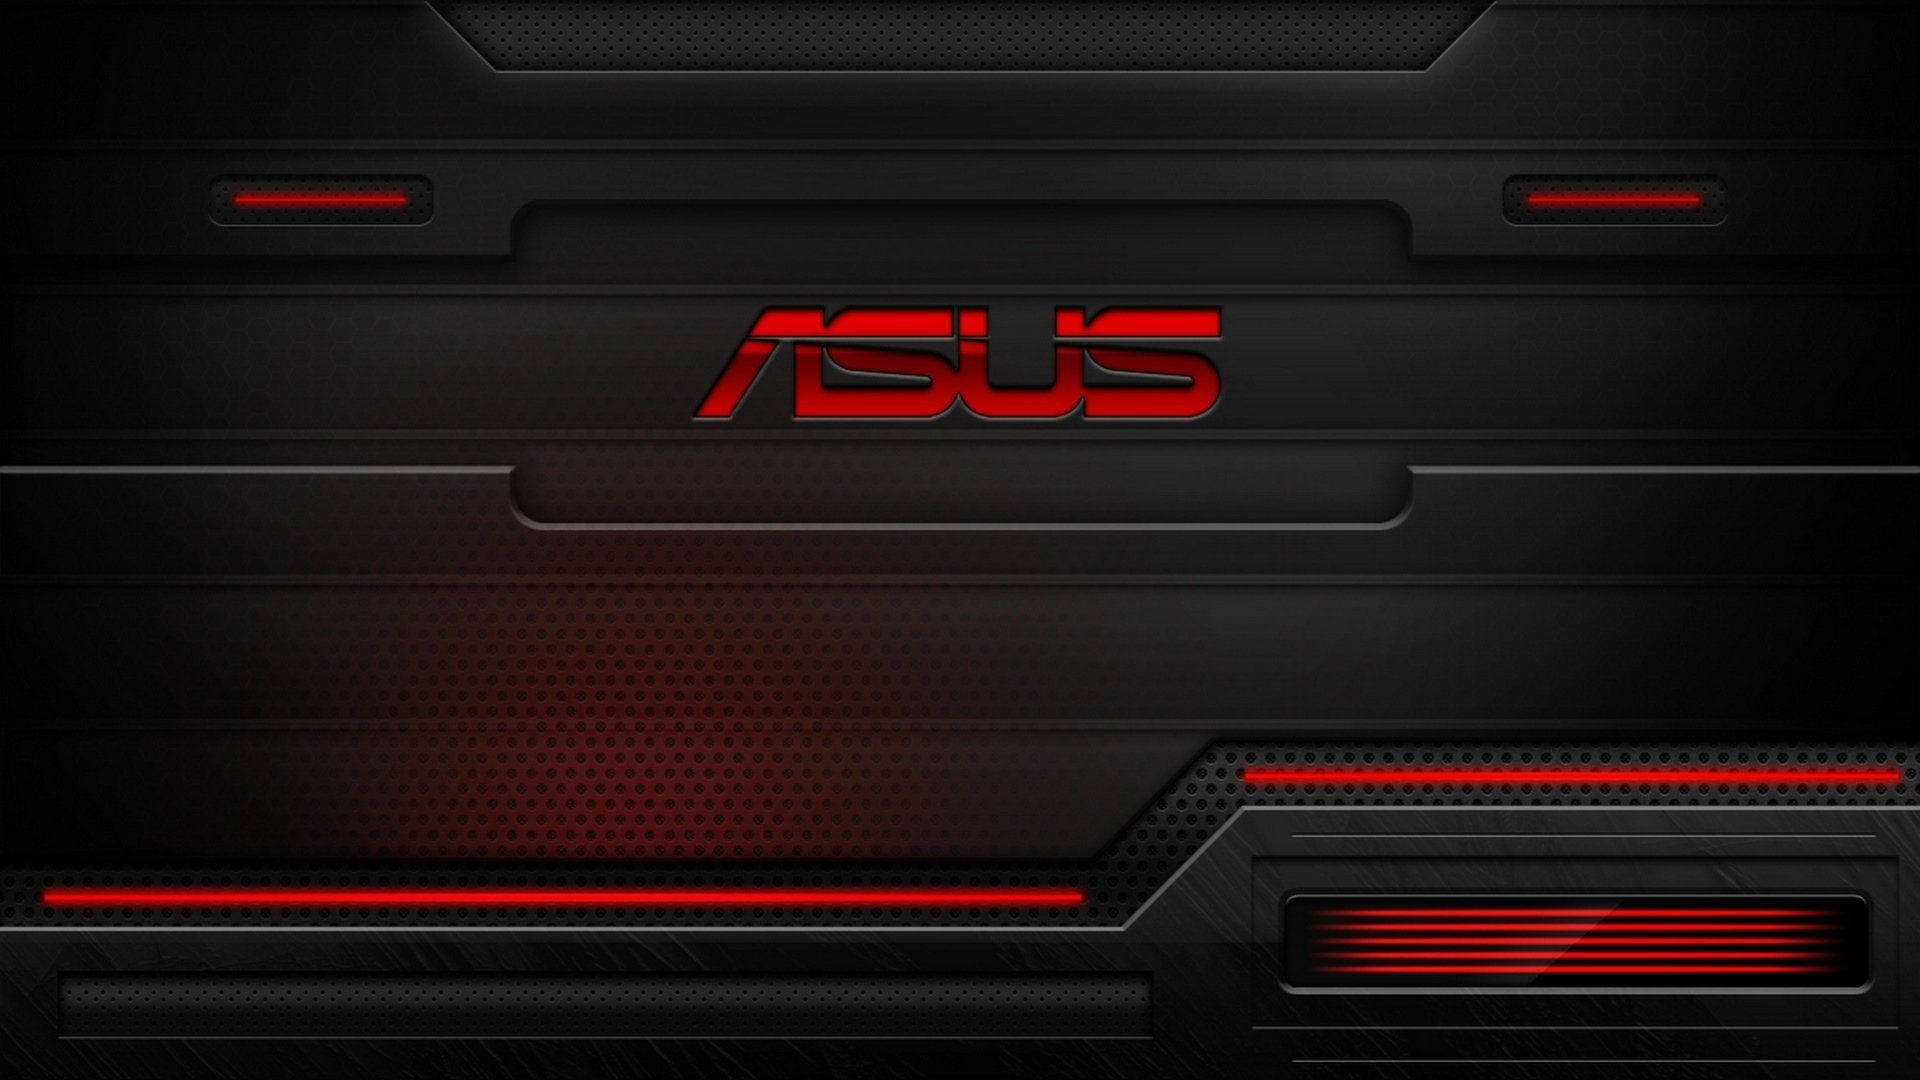 Asus Neon Red Logo Wallpaper